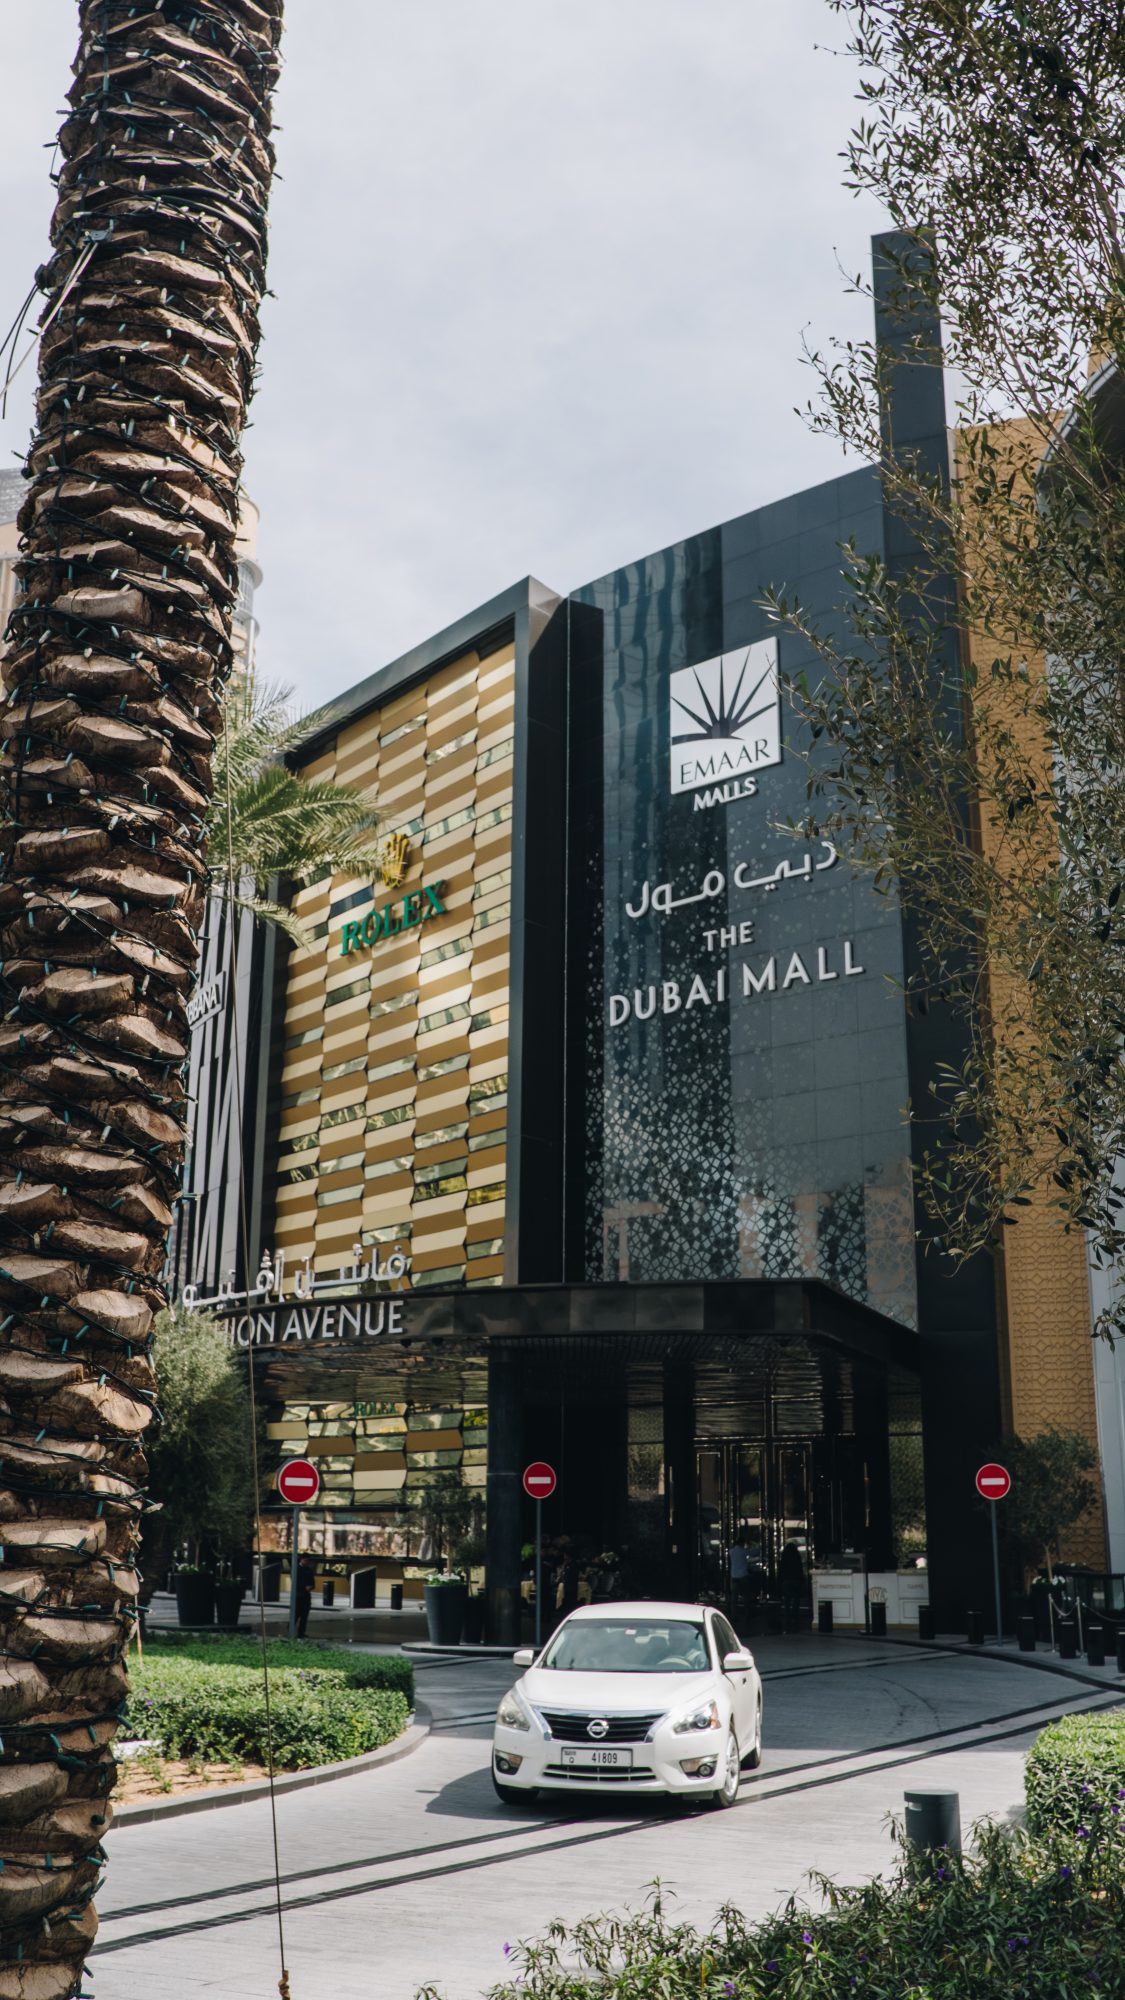 Fashion Avenue - Dubaï Mall